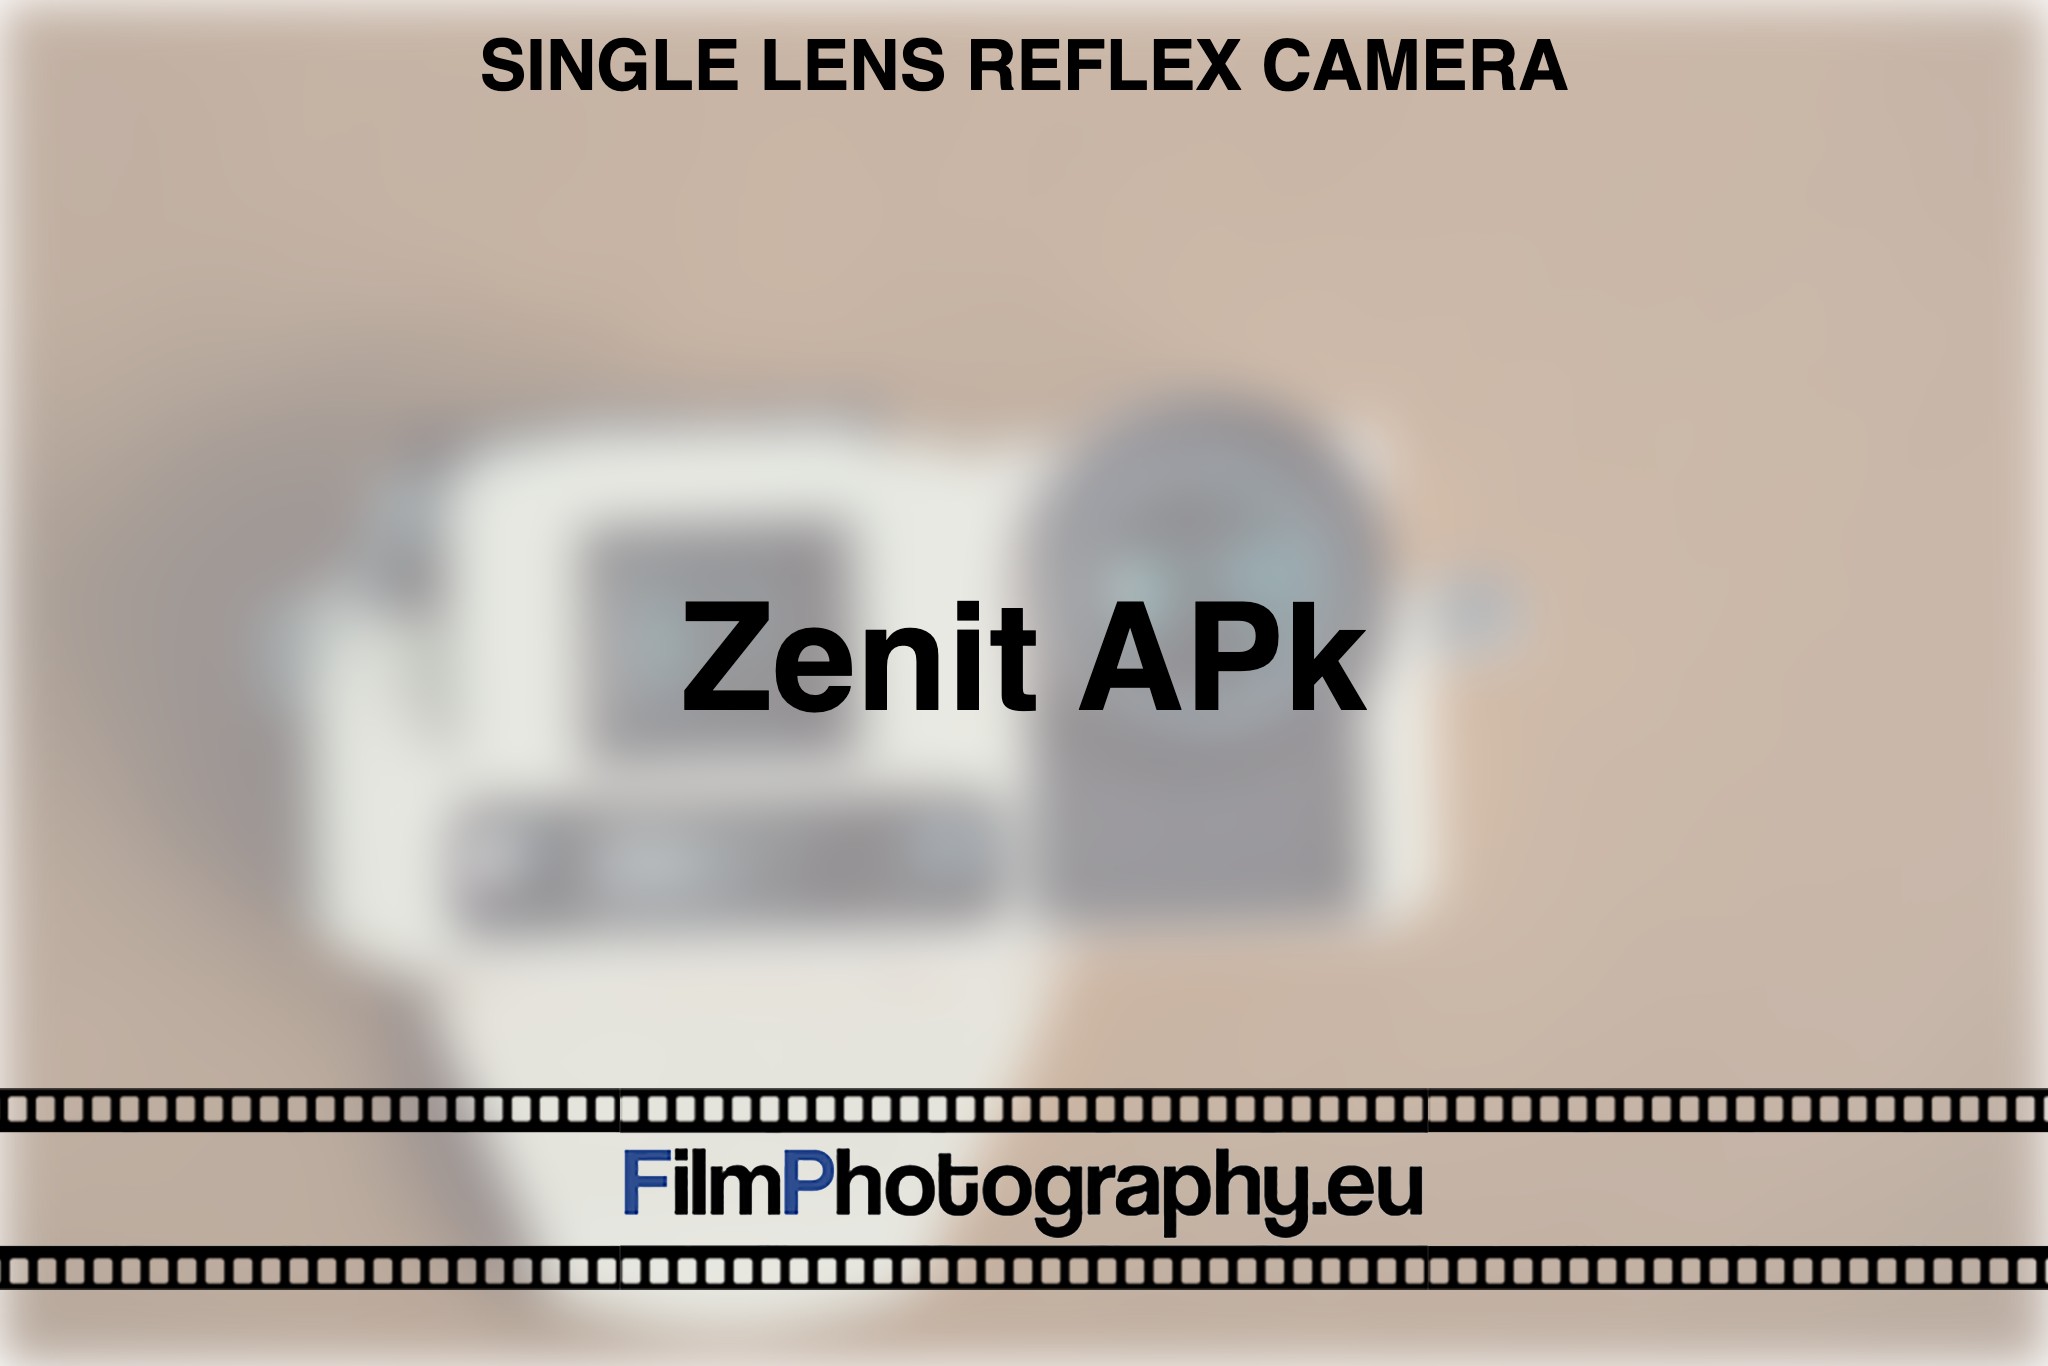 zenit-apk-single-lens-reflex-camera-bnv